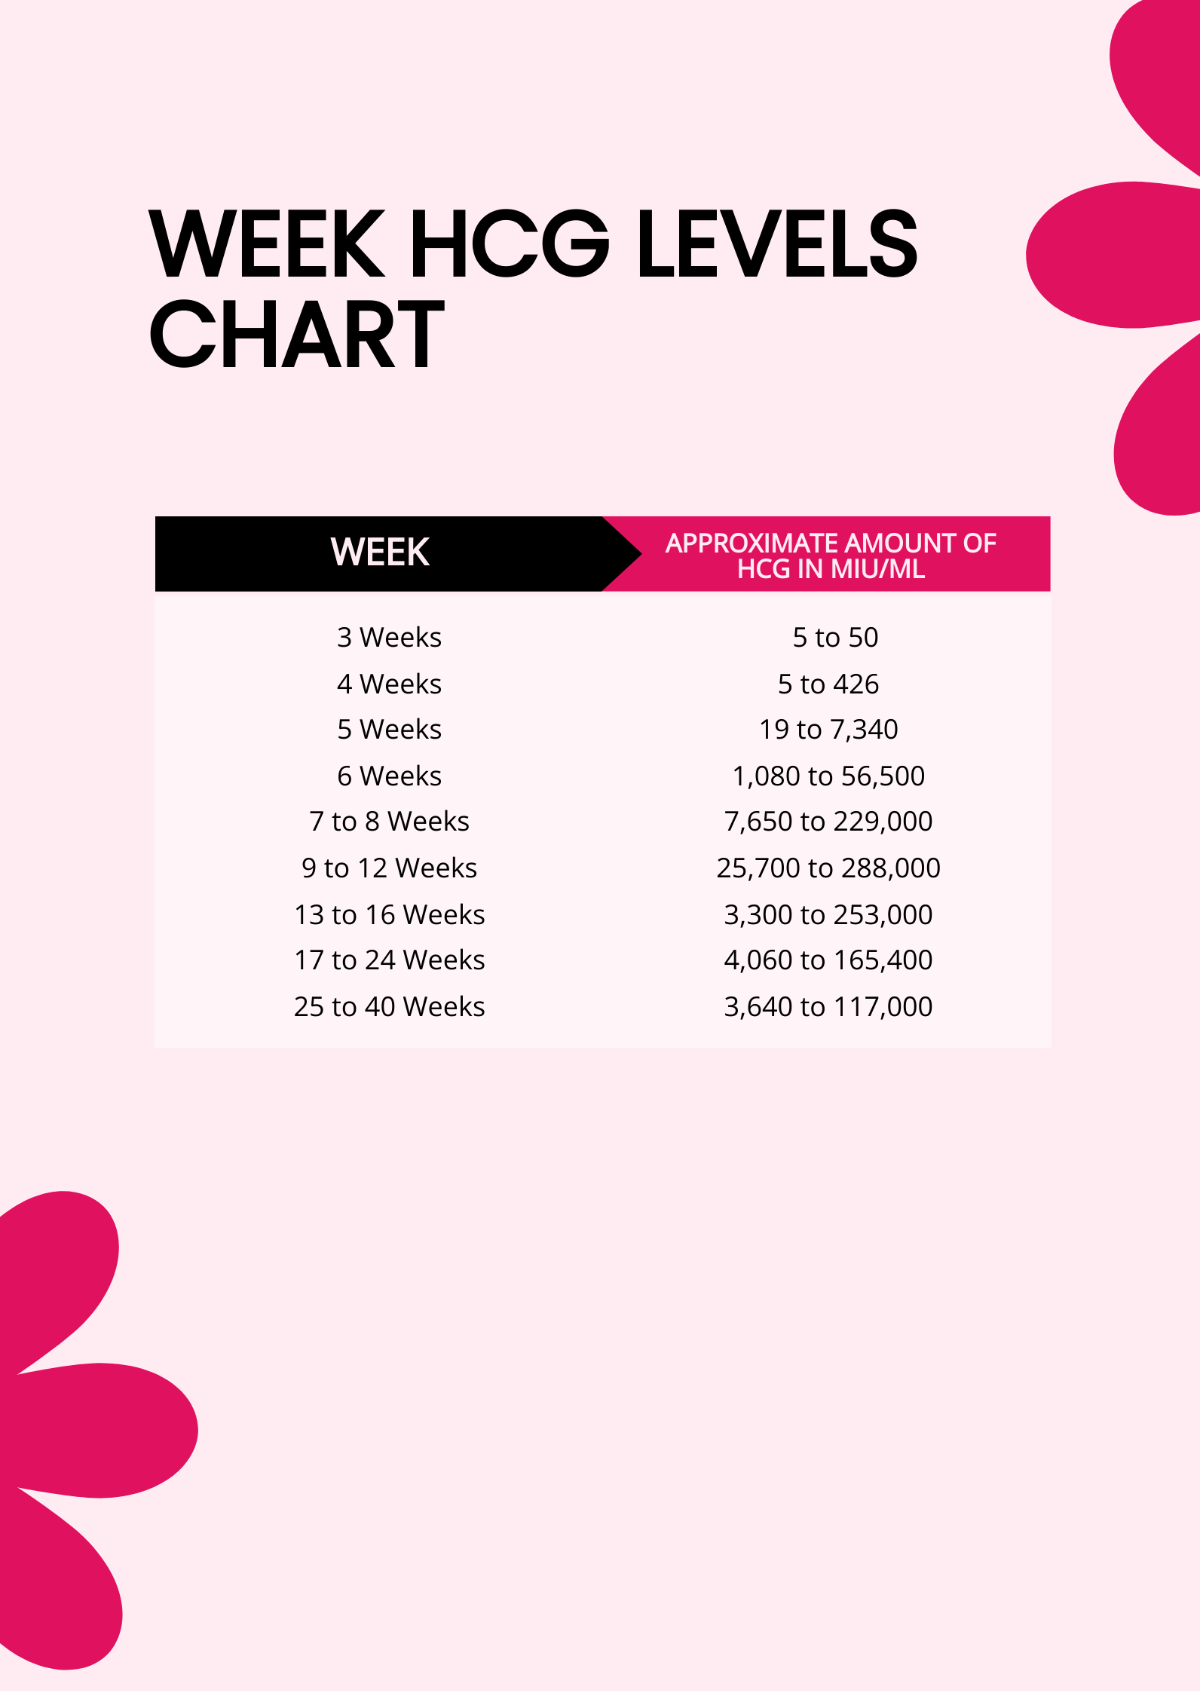 Week HCG Levels Chart Template